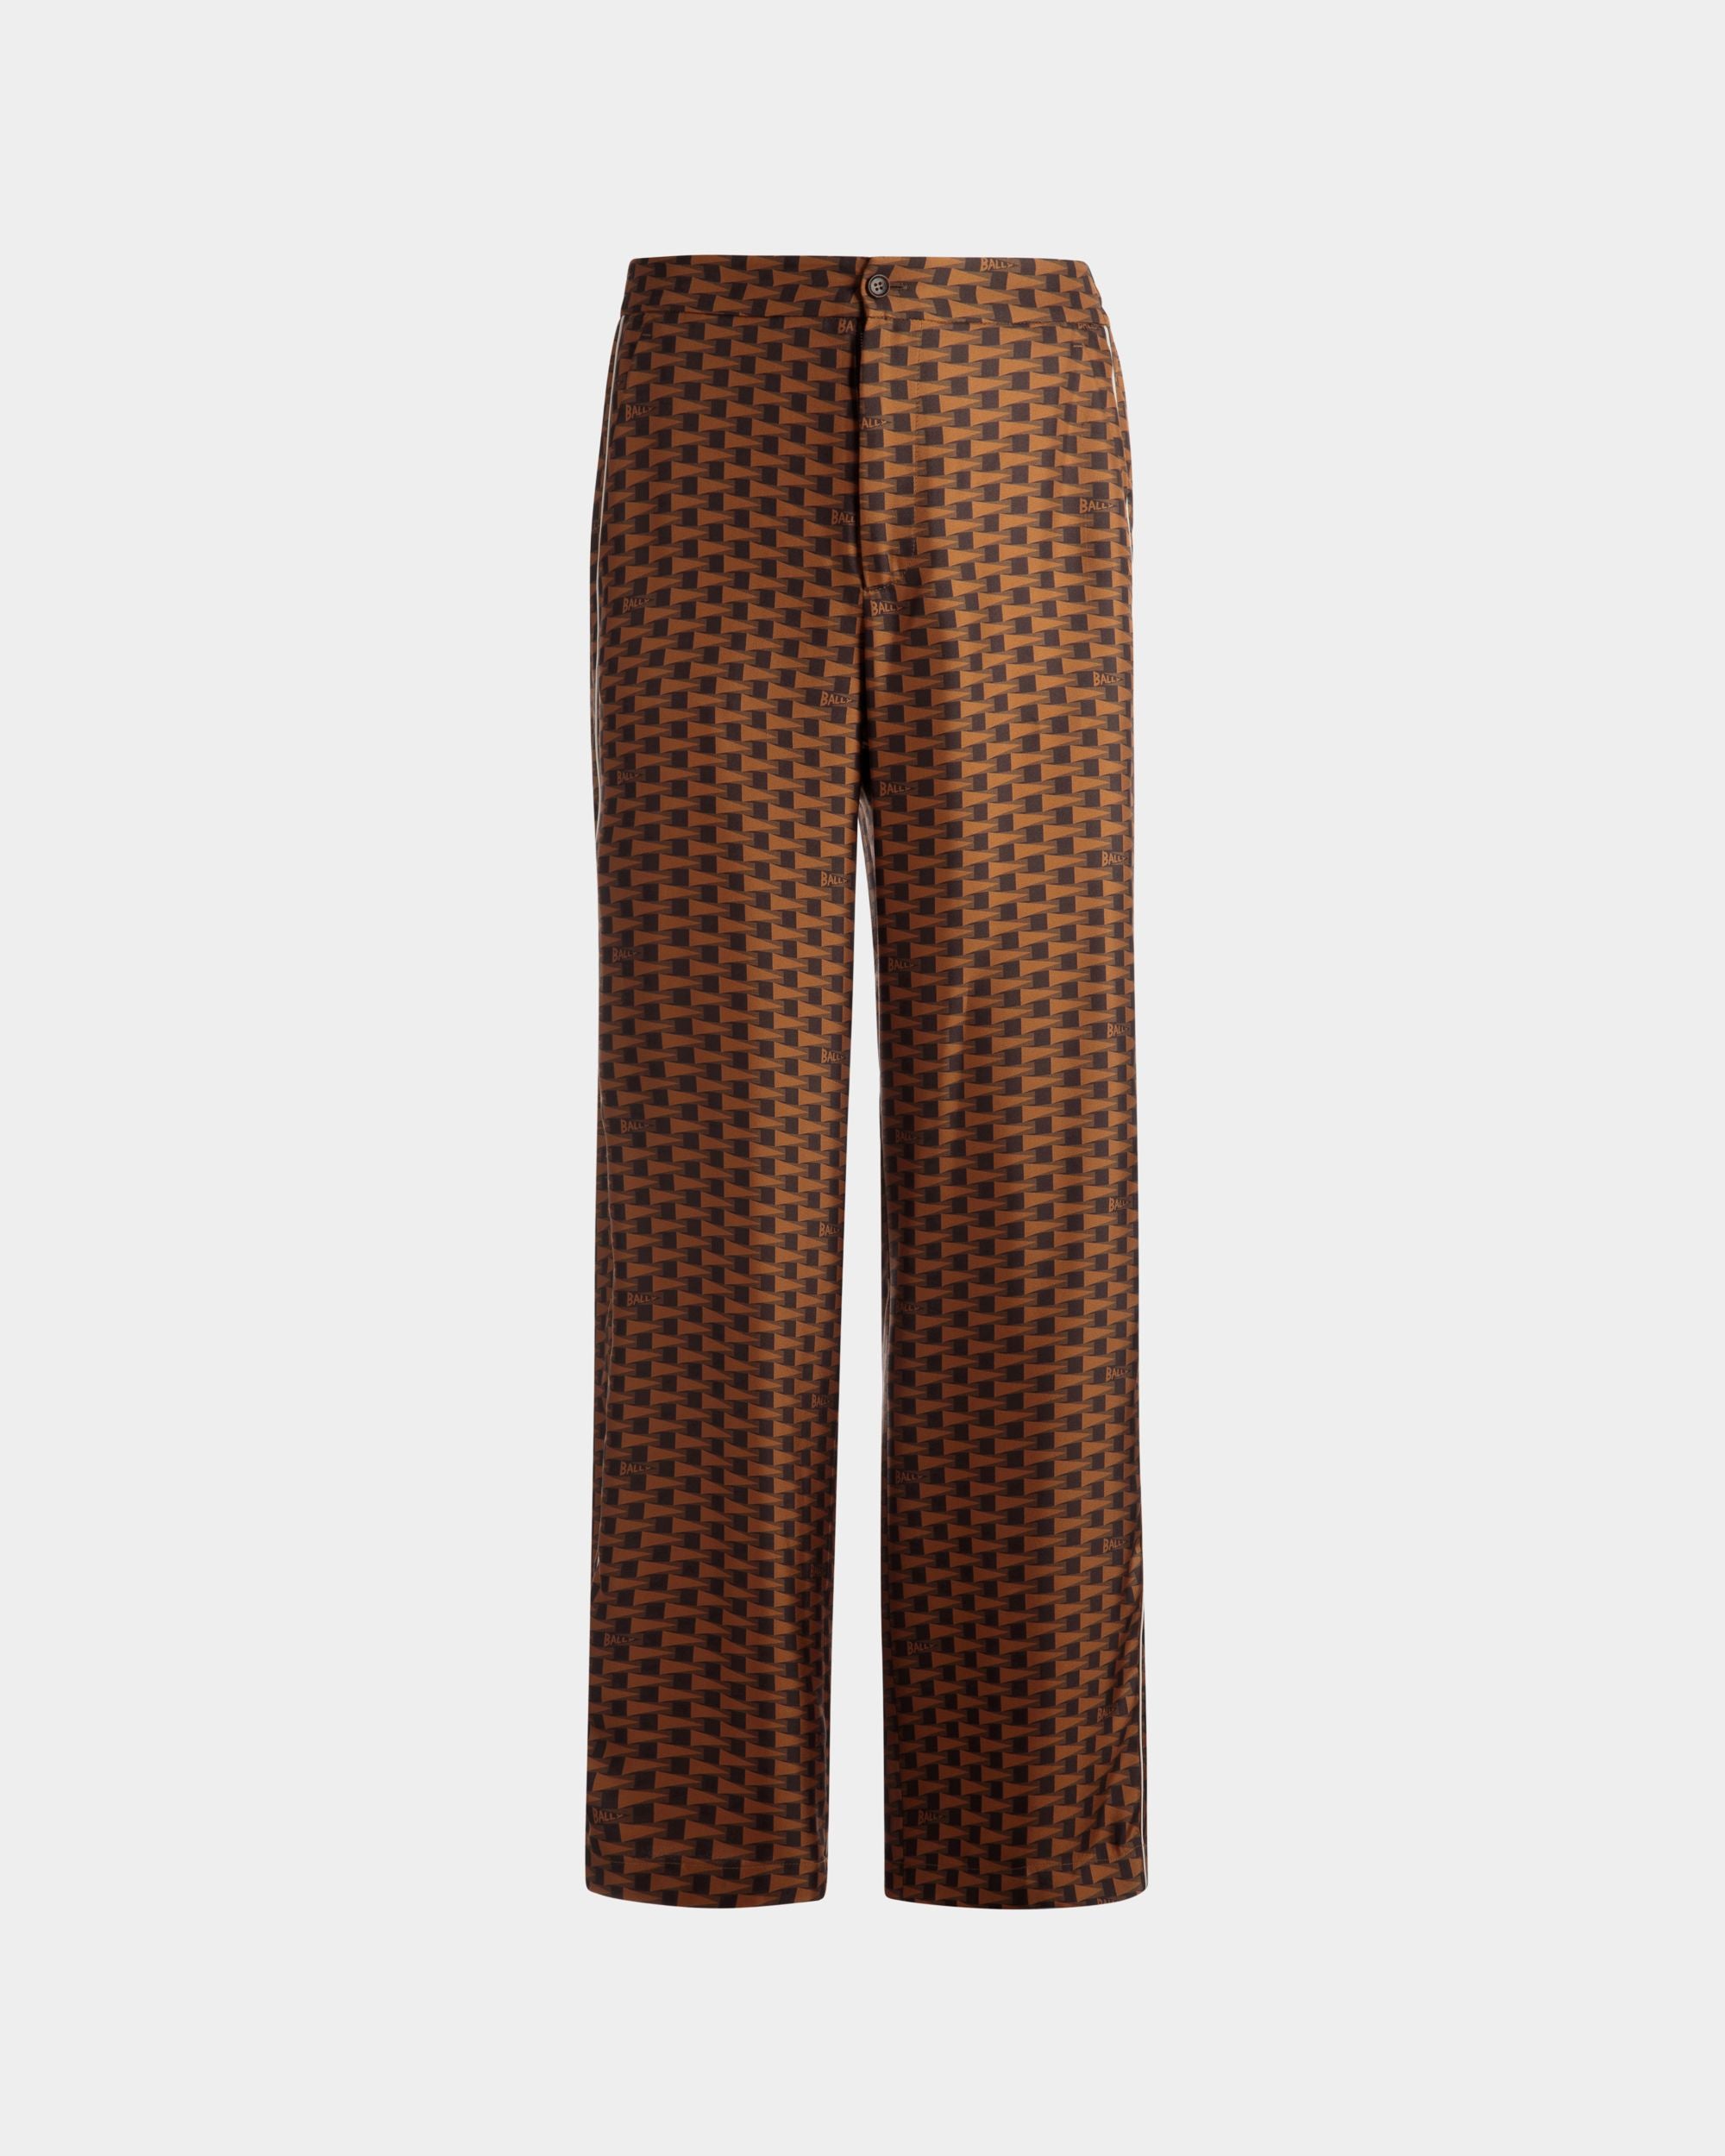 Pennant Print Pants | Men's Pants | Brown Silk | Bally | Still Life Front